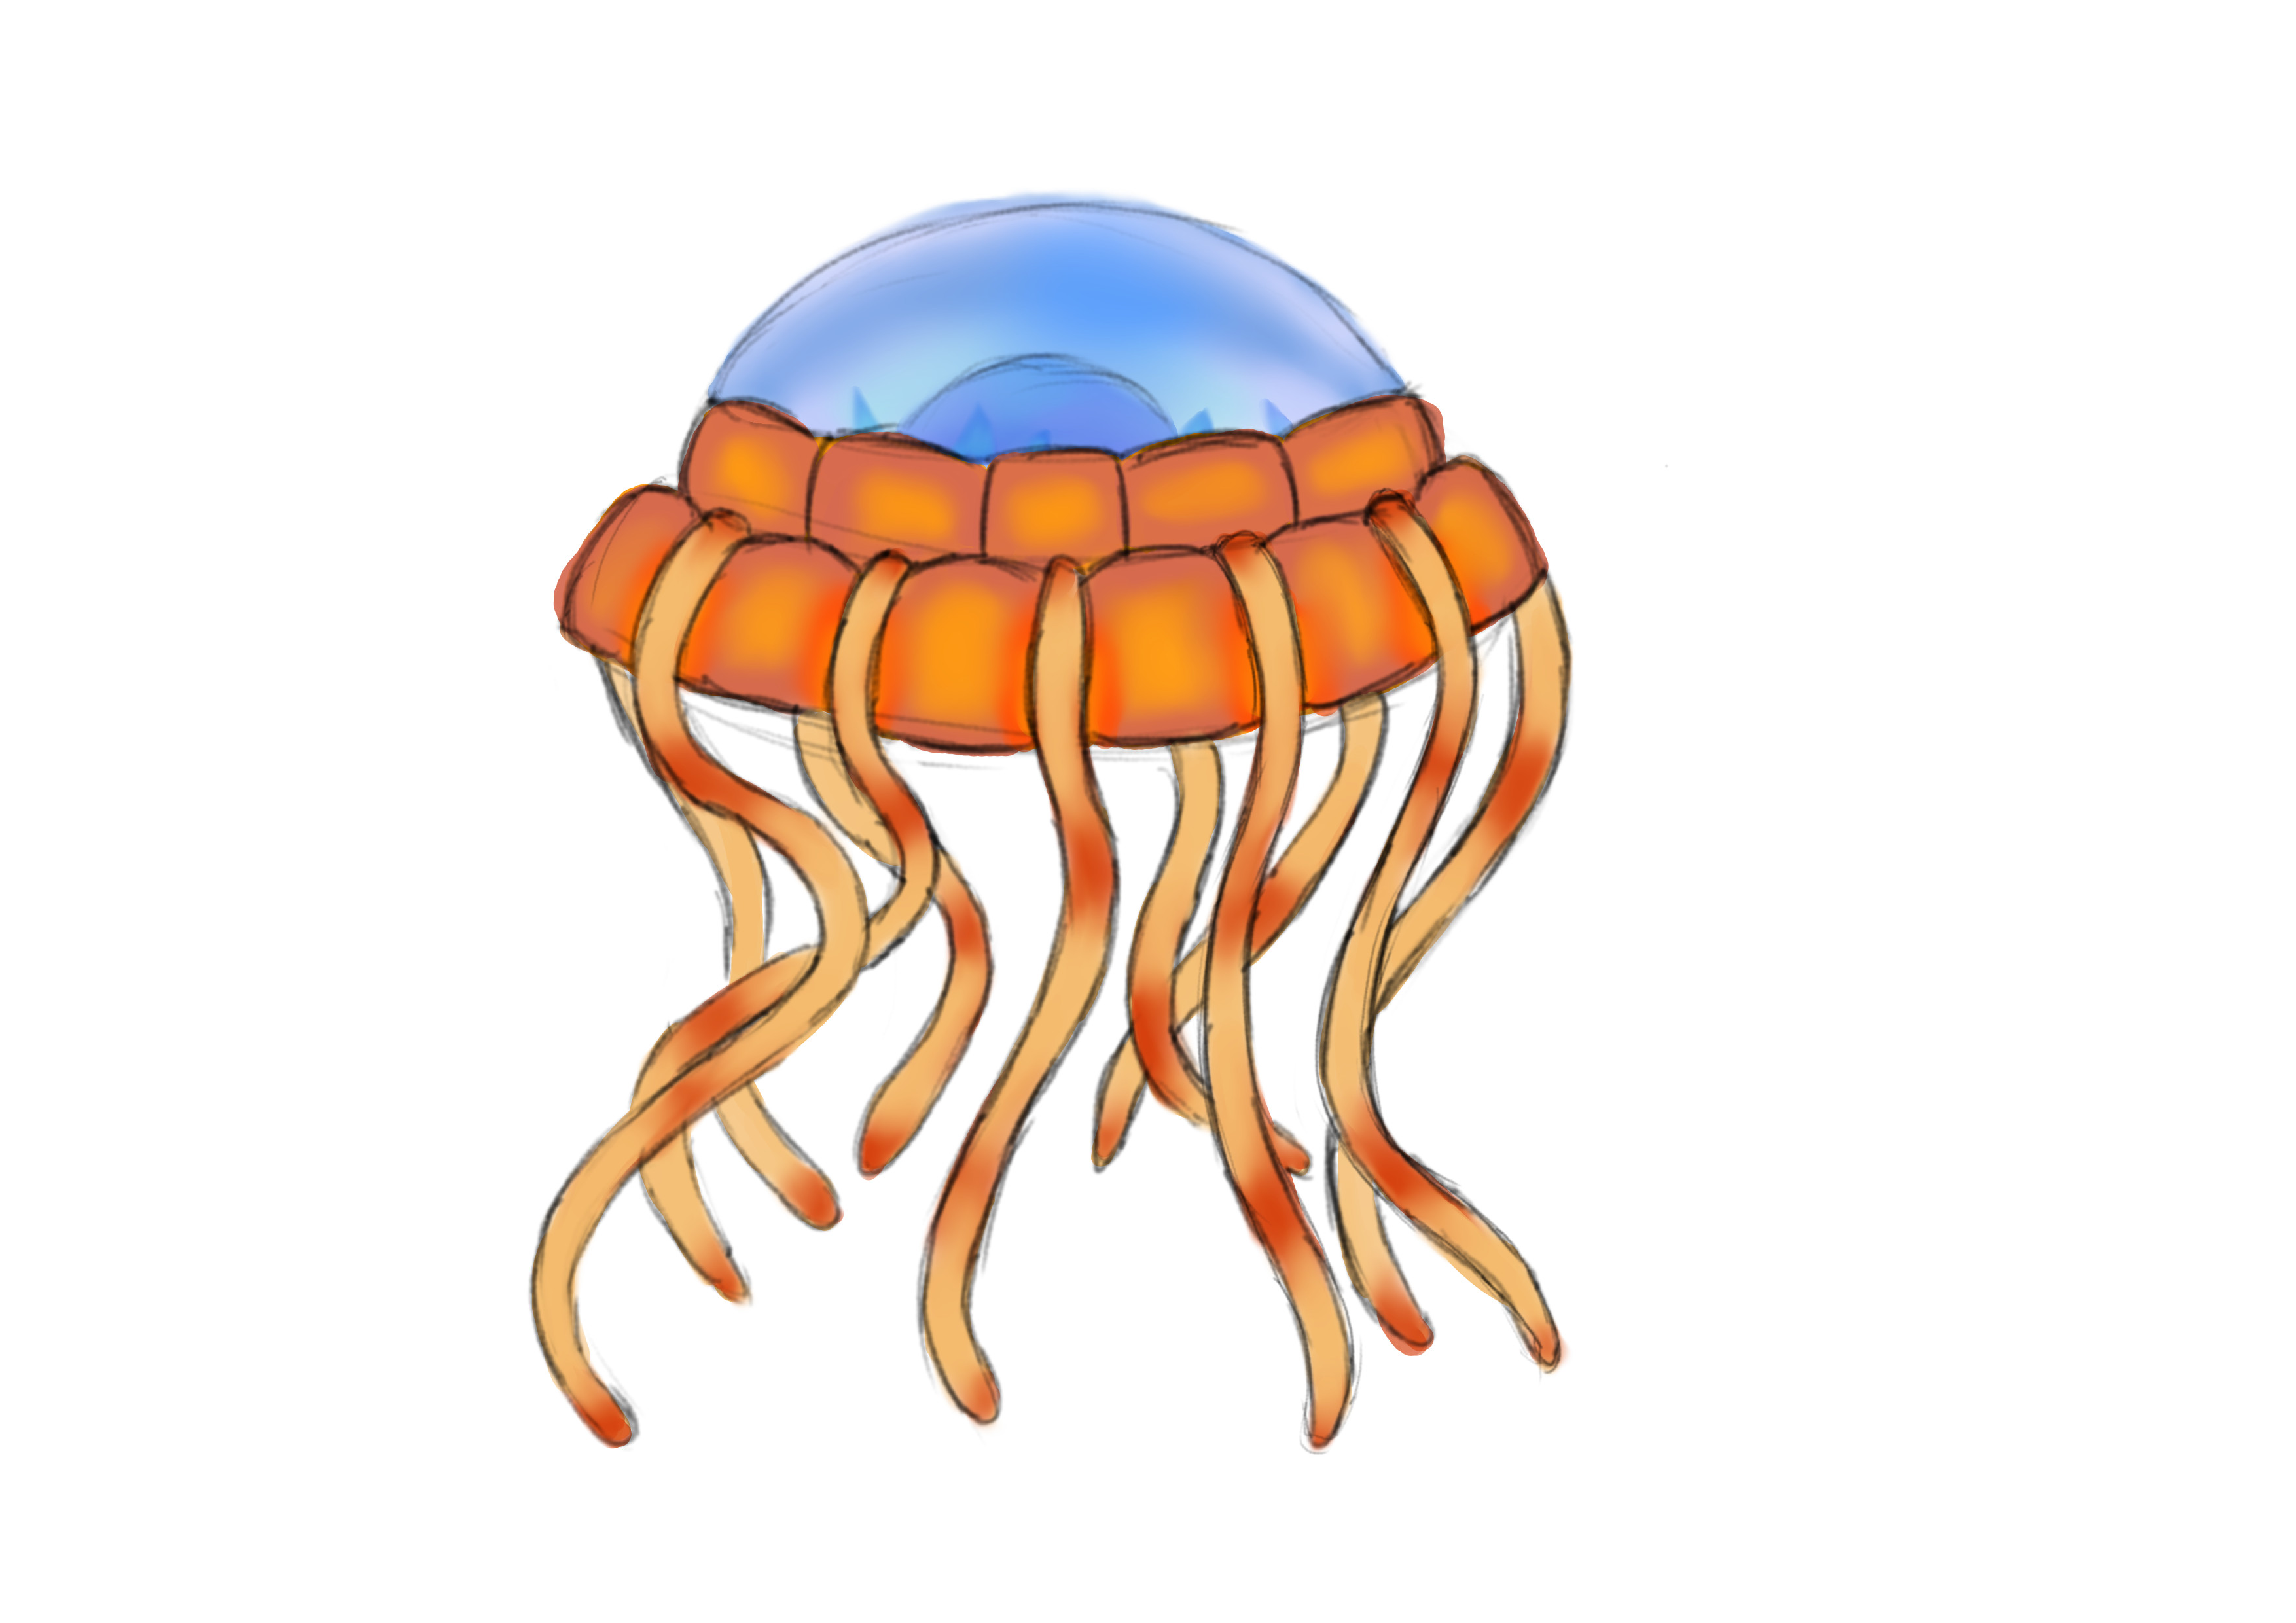 Alarm jellyfish concept